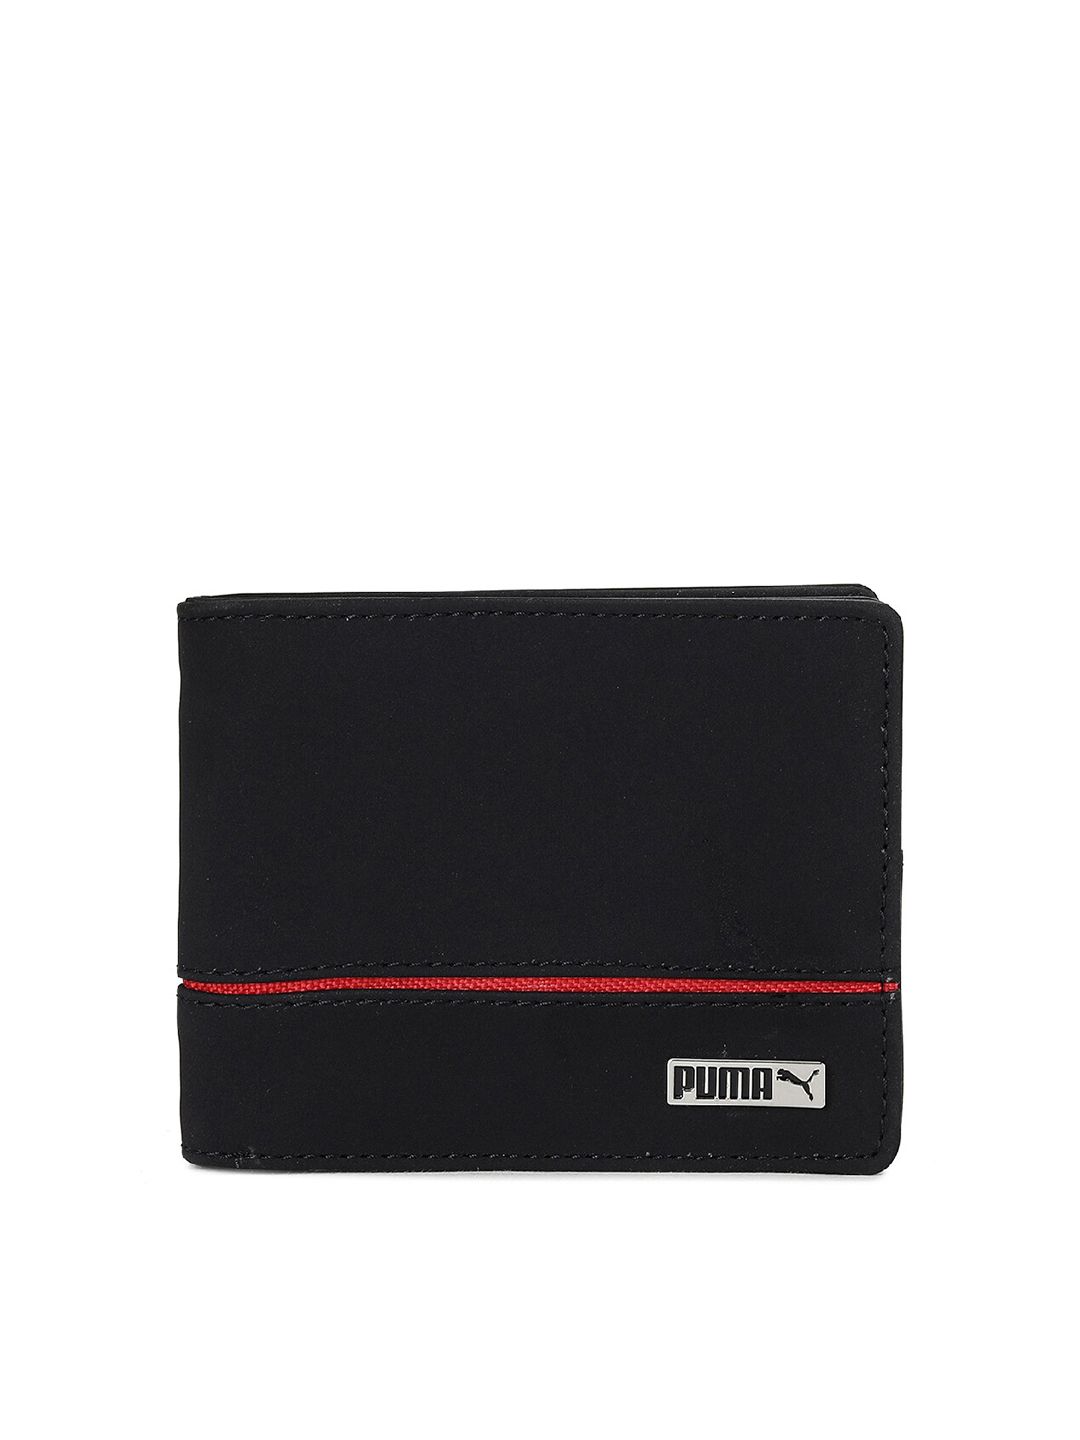 Puma Unisex Black Style Wallet Price in India